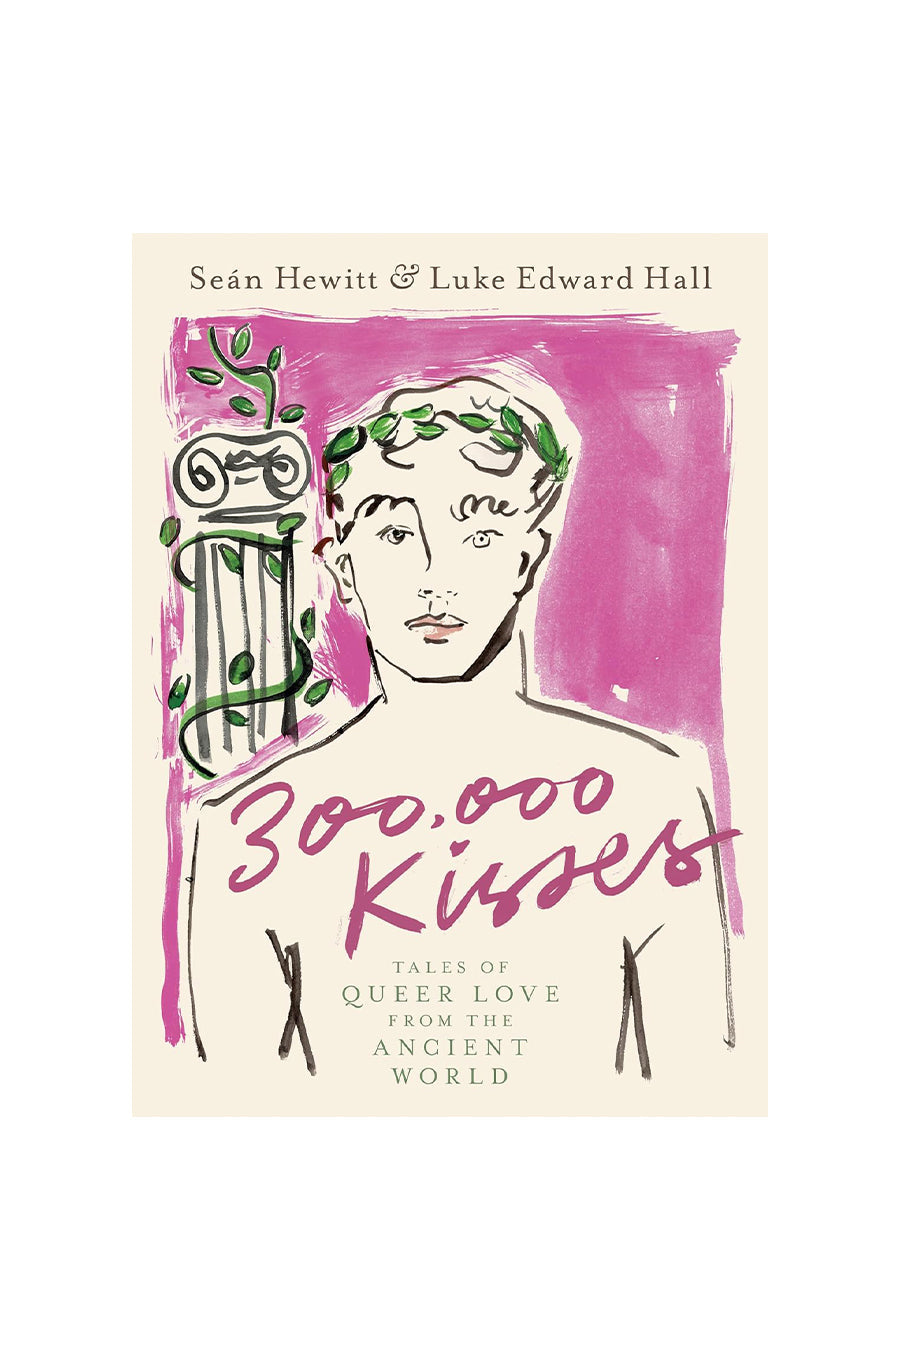 300,000 Kisses - Seán Hewitt